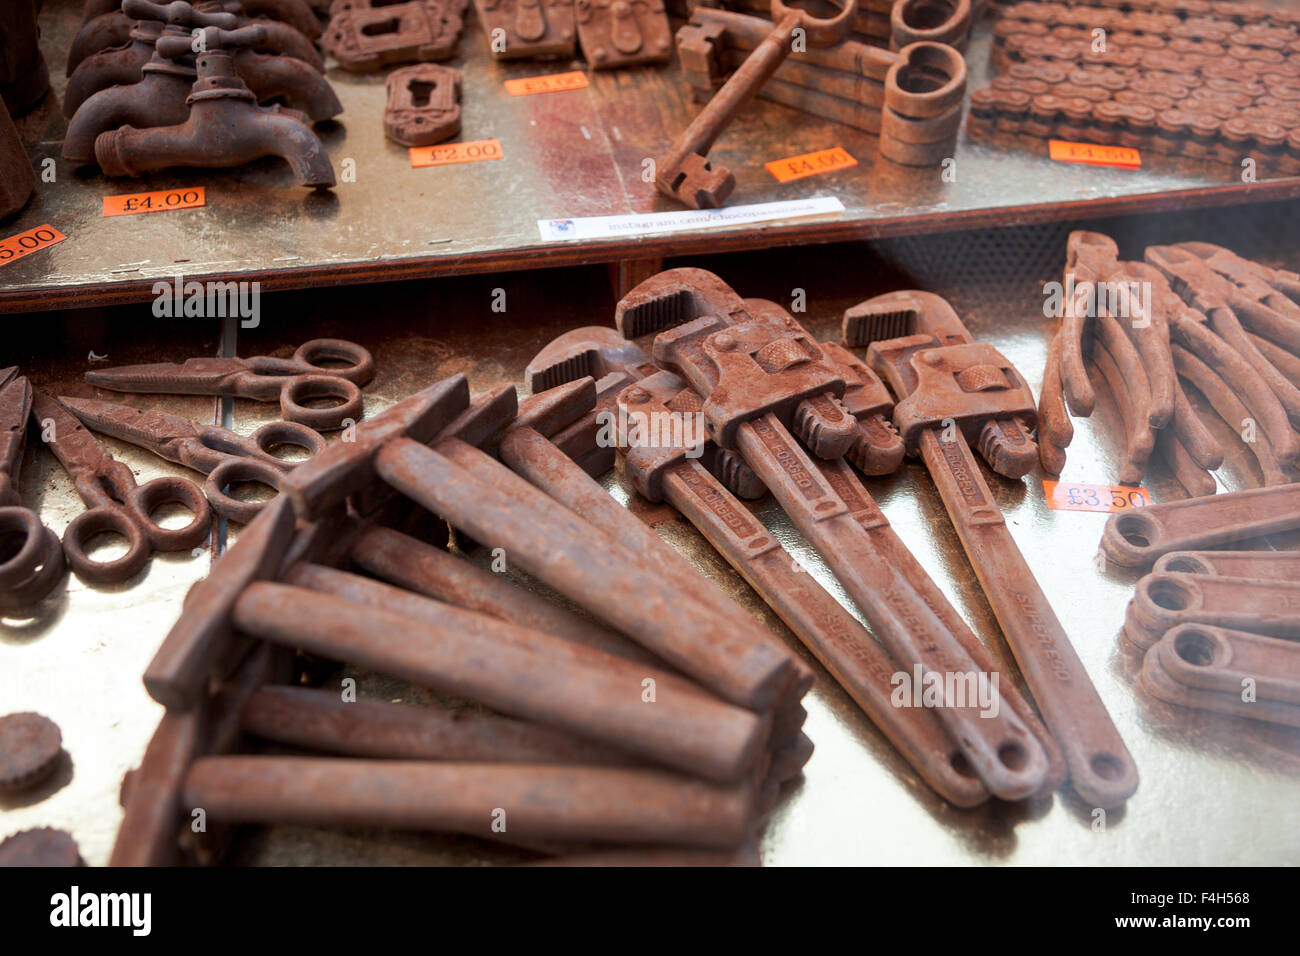 https://c8.alamy.com/comp/F4H568/london-uk-18th-october-2015-tools-made-of-chocolate-international-F4H568.jpg